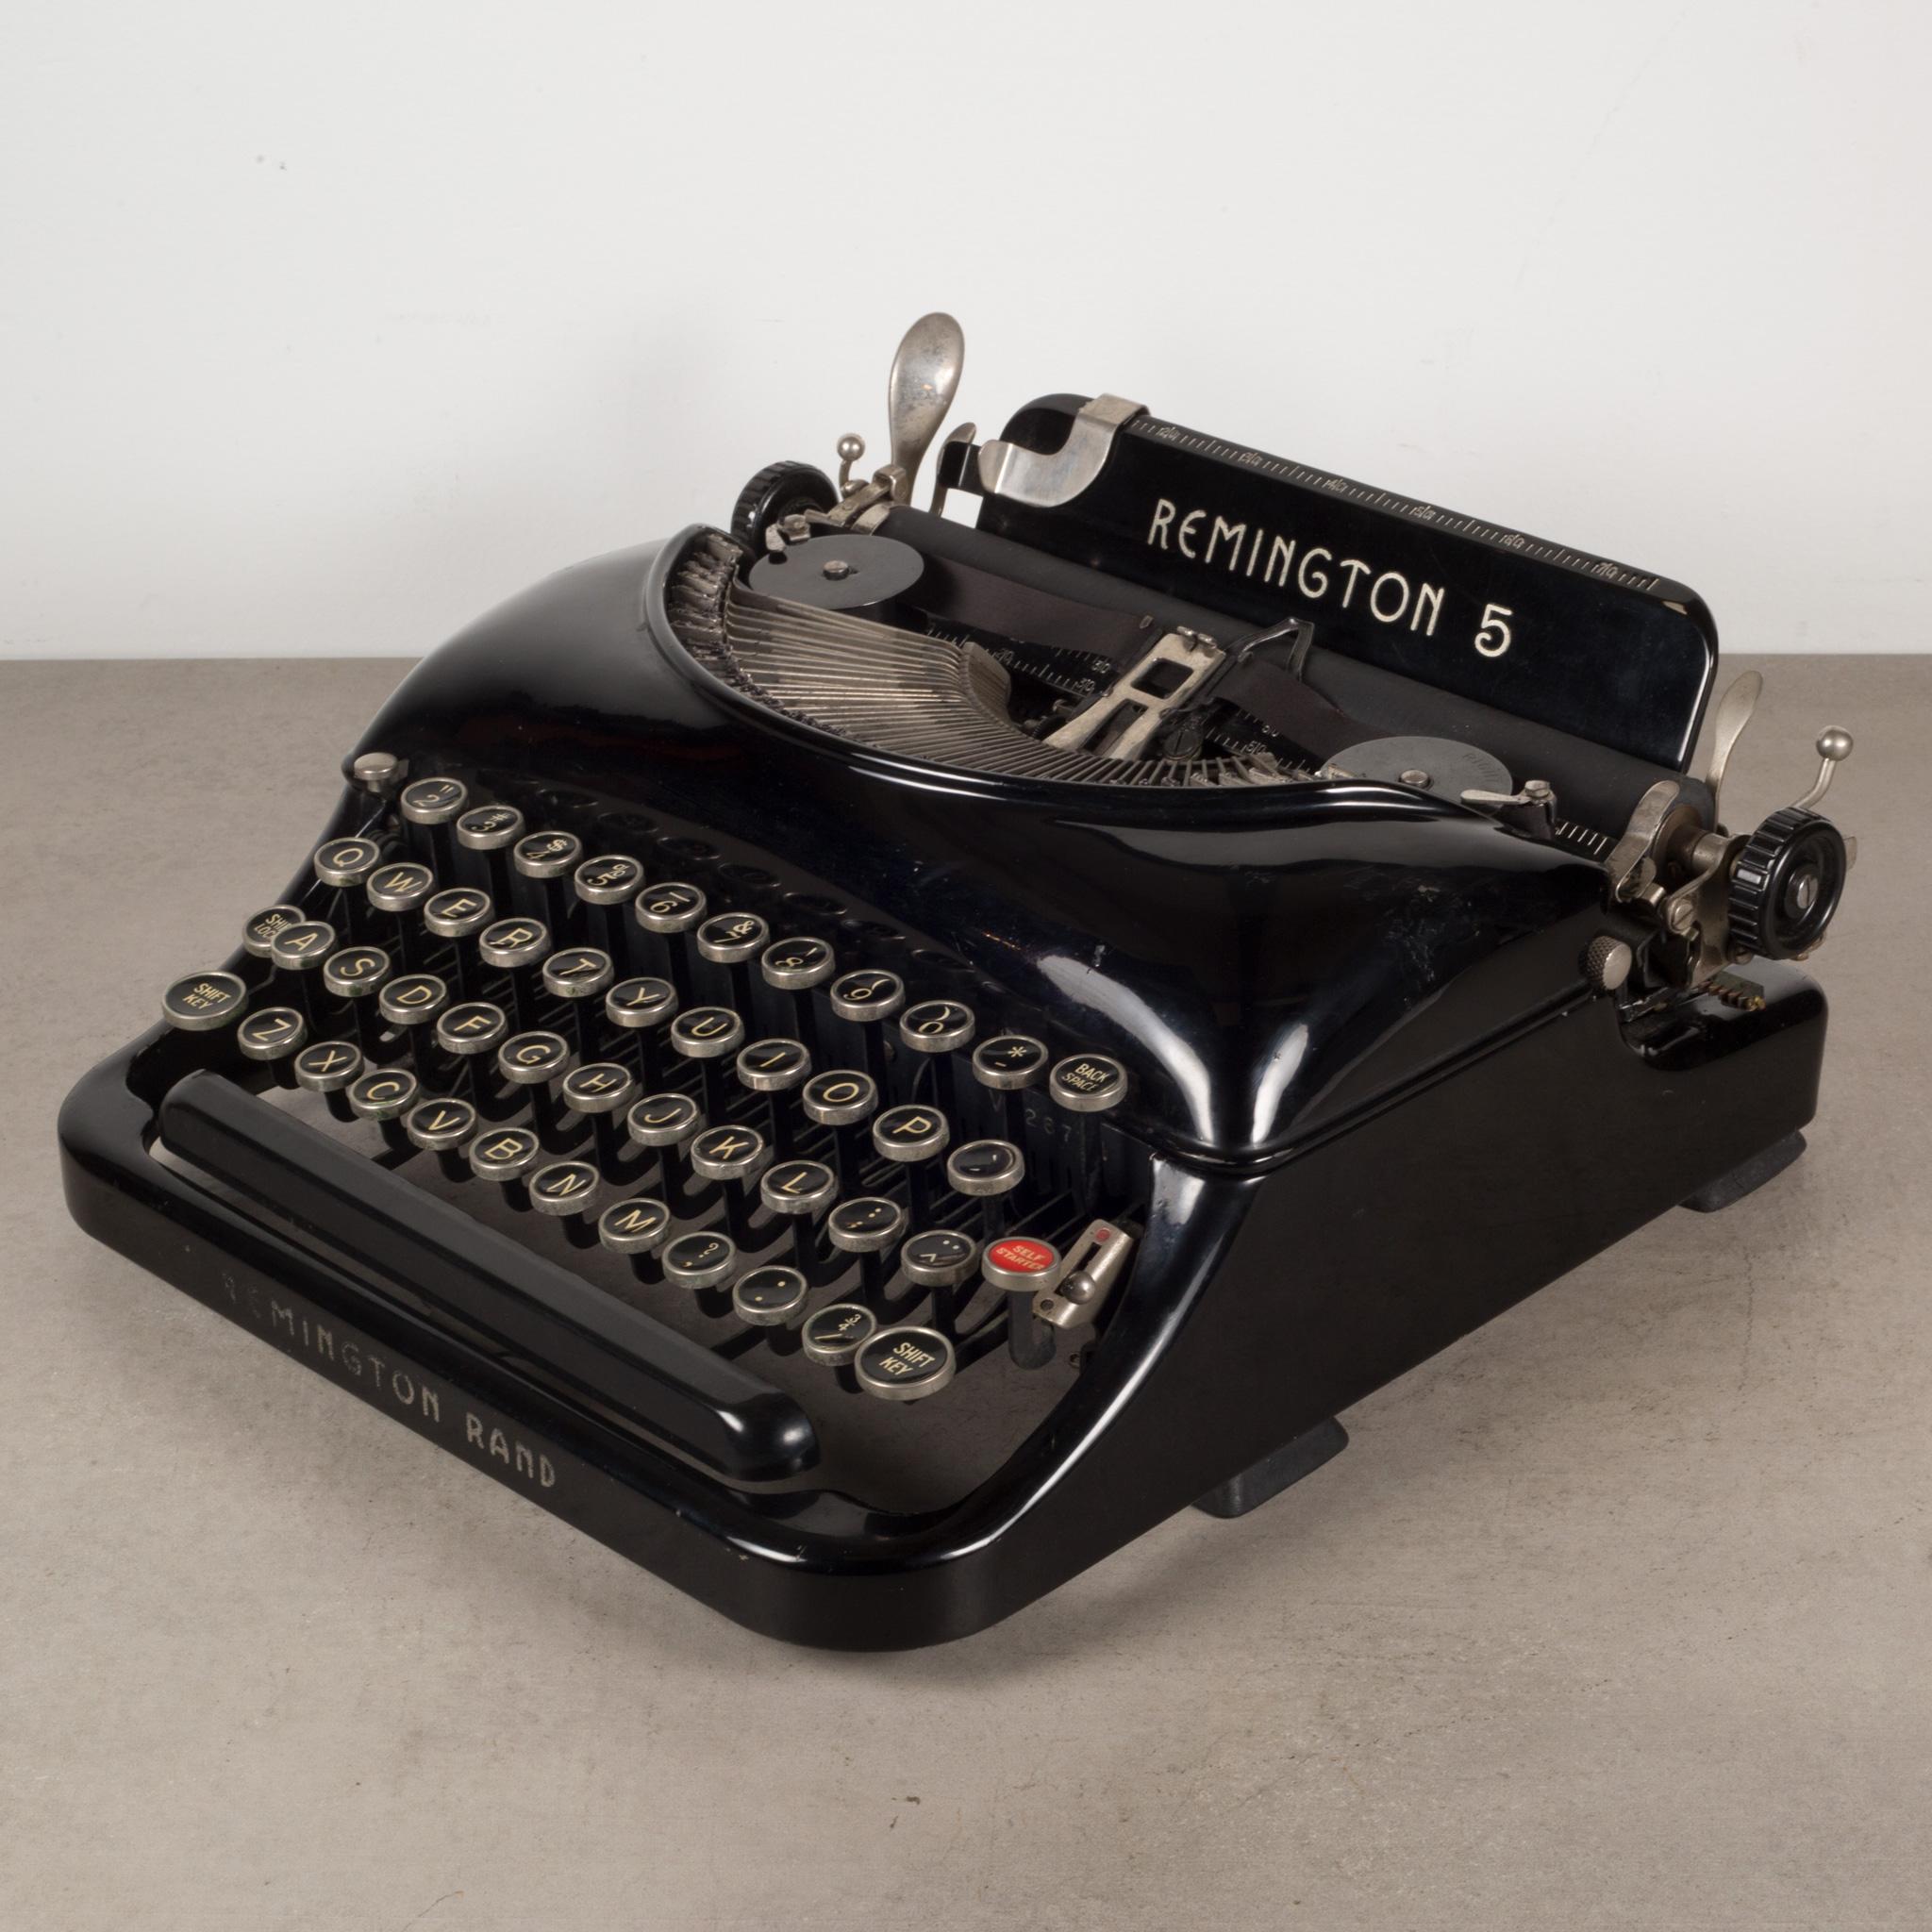 Industrial Antique Refurbished Art Deco Remington 5 Typewriter C.1935